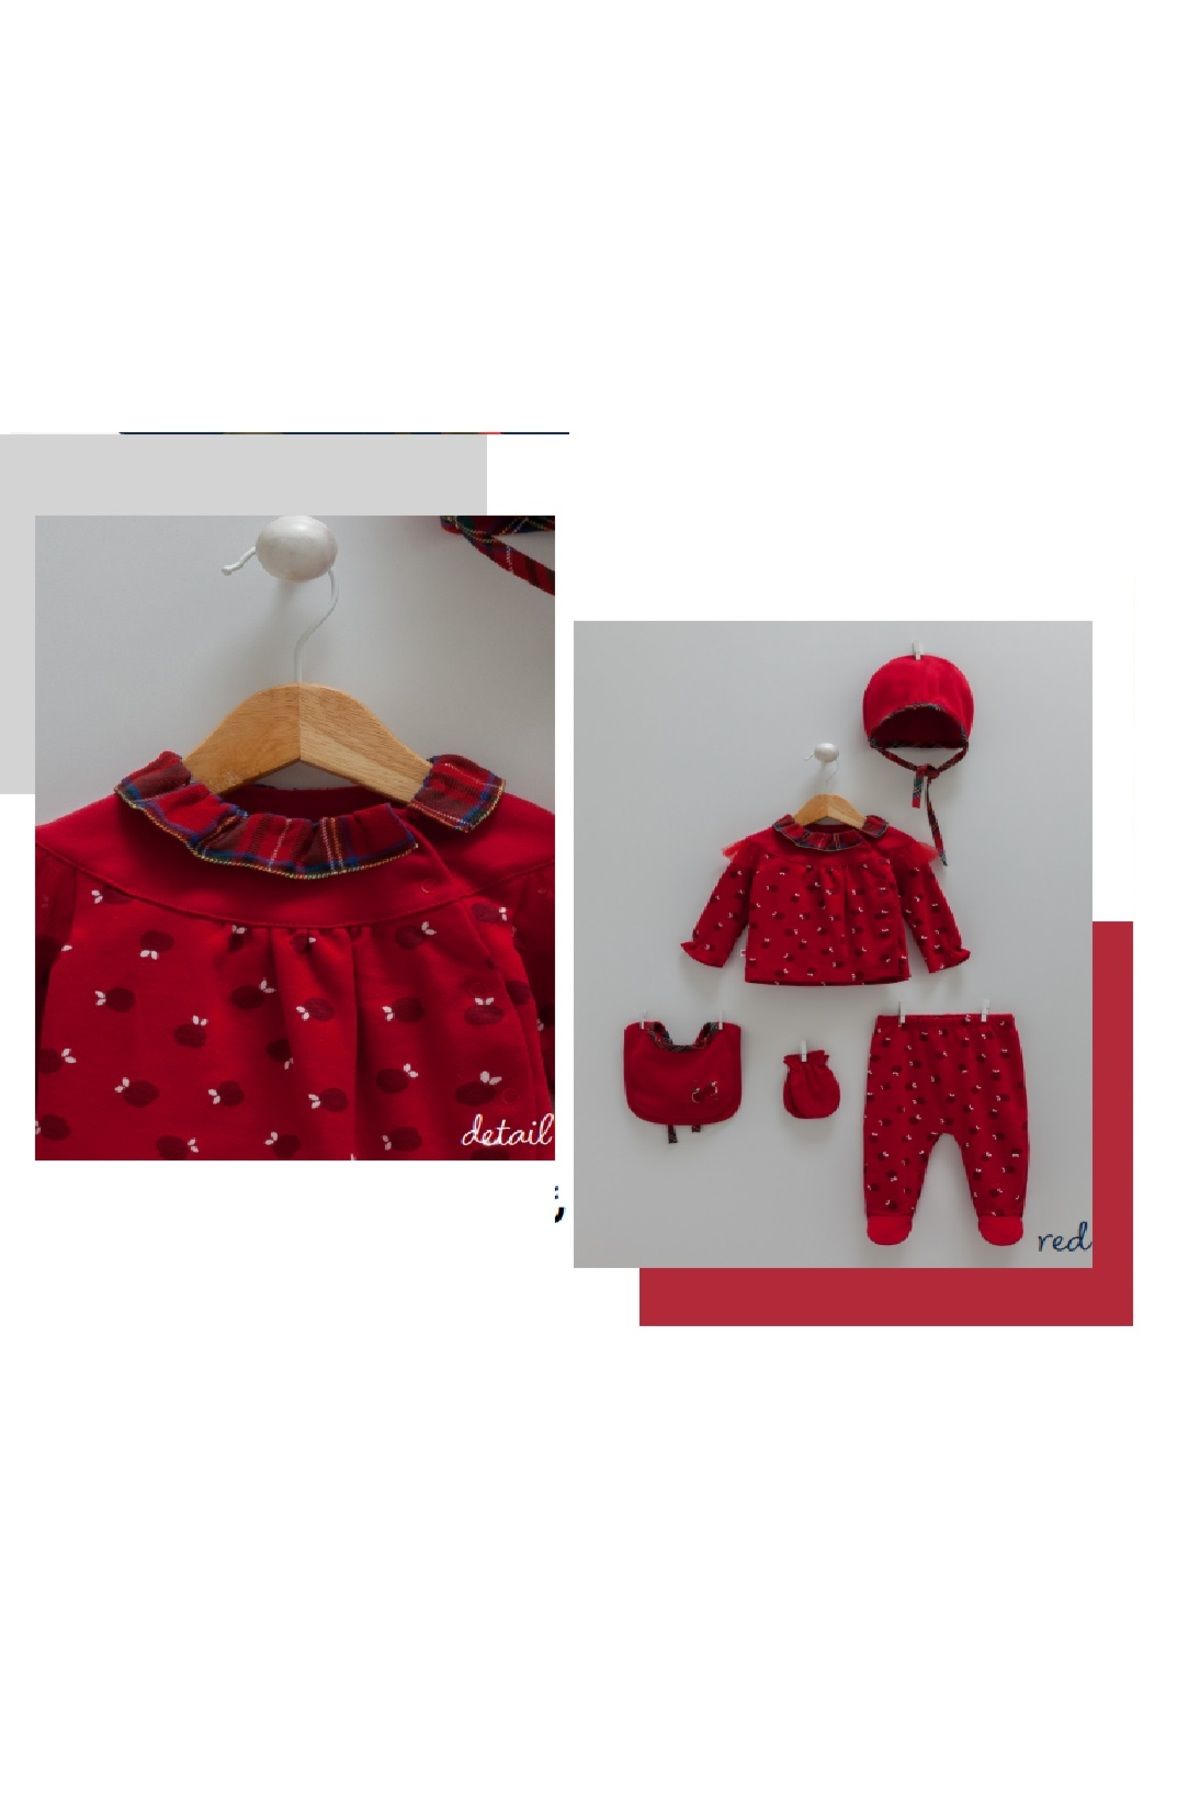 Caramell ست ترخیص نوزاد از بیمارستان با تم سال نو لباس دختر قرمز رنگ 5 تایی